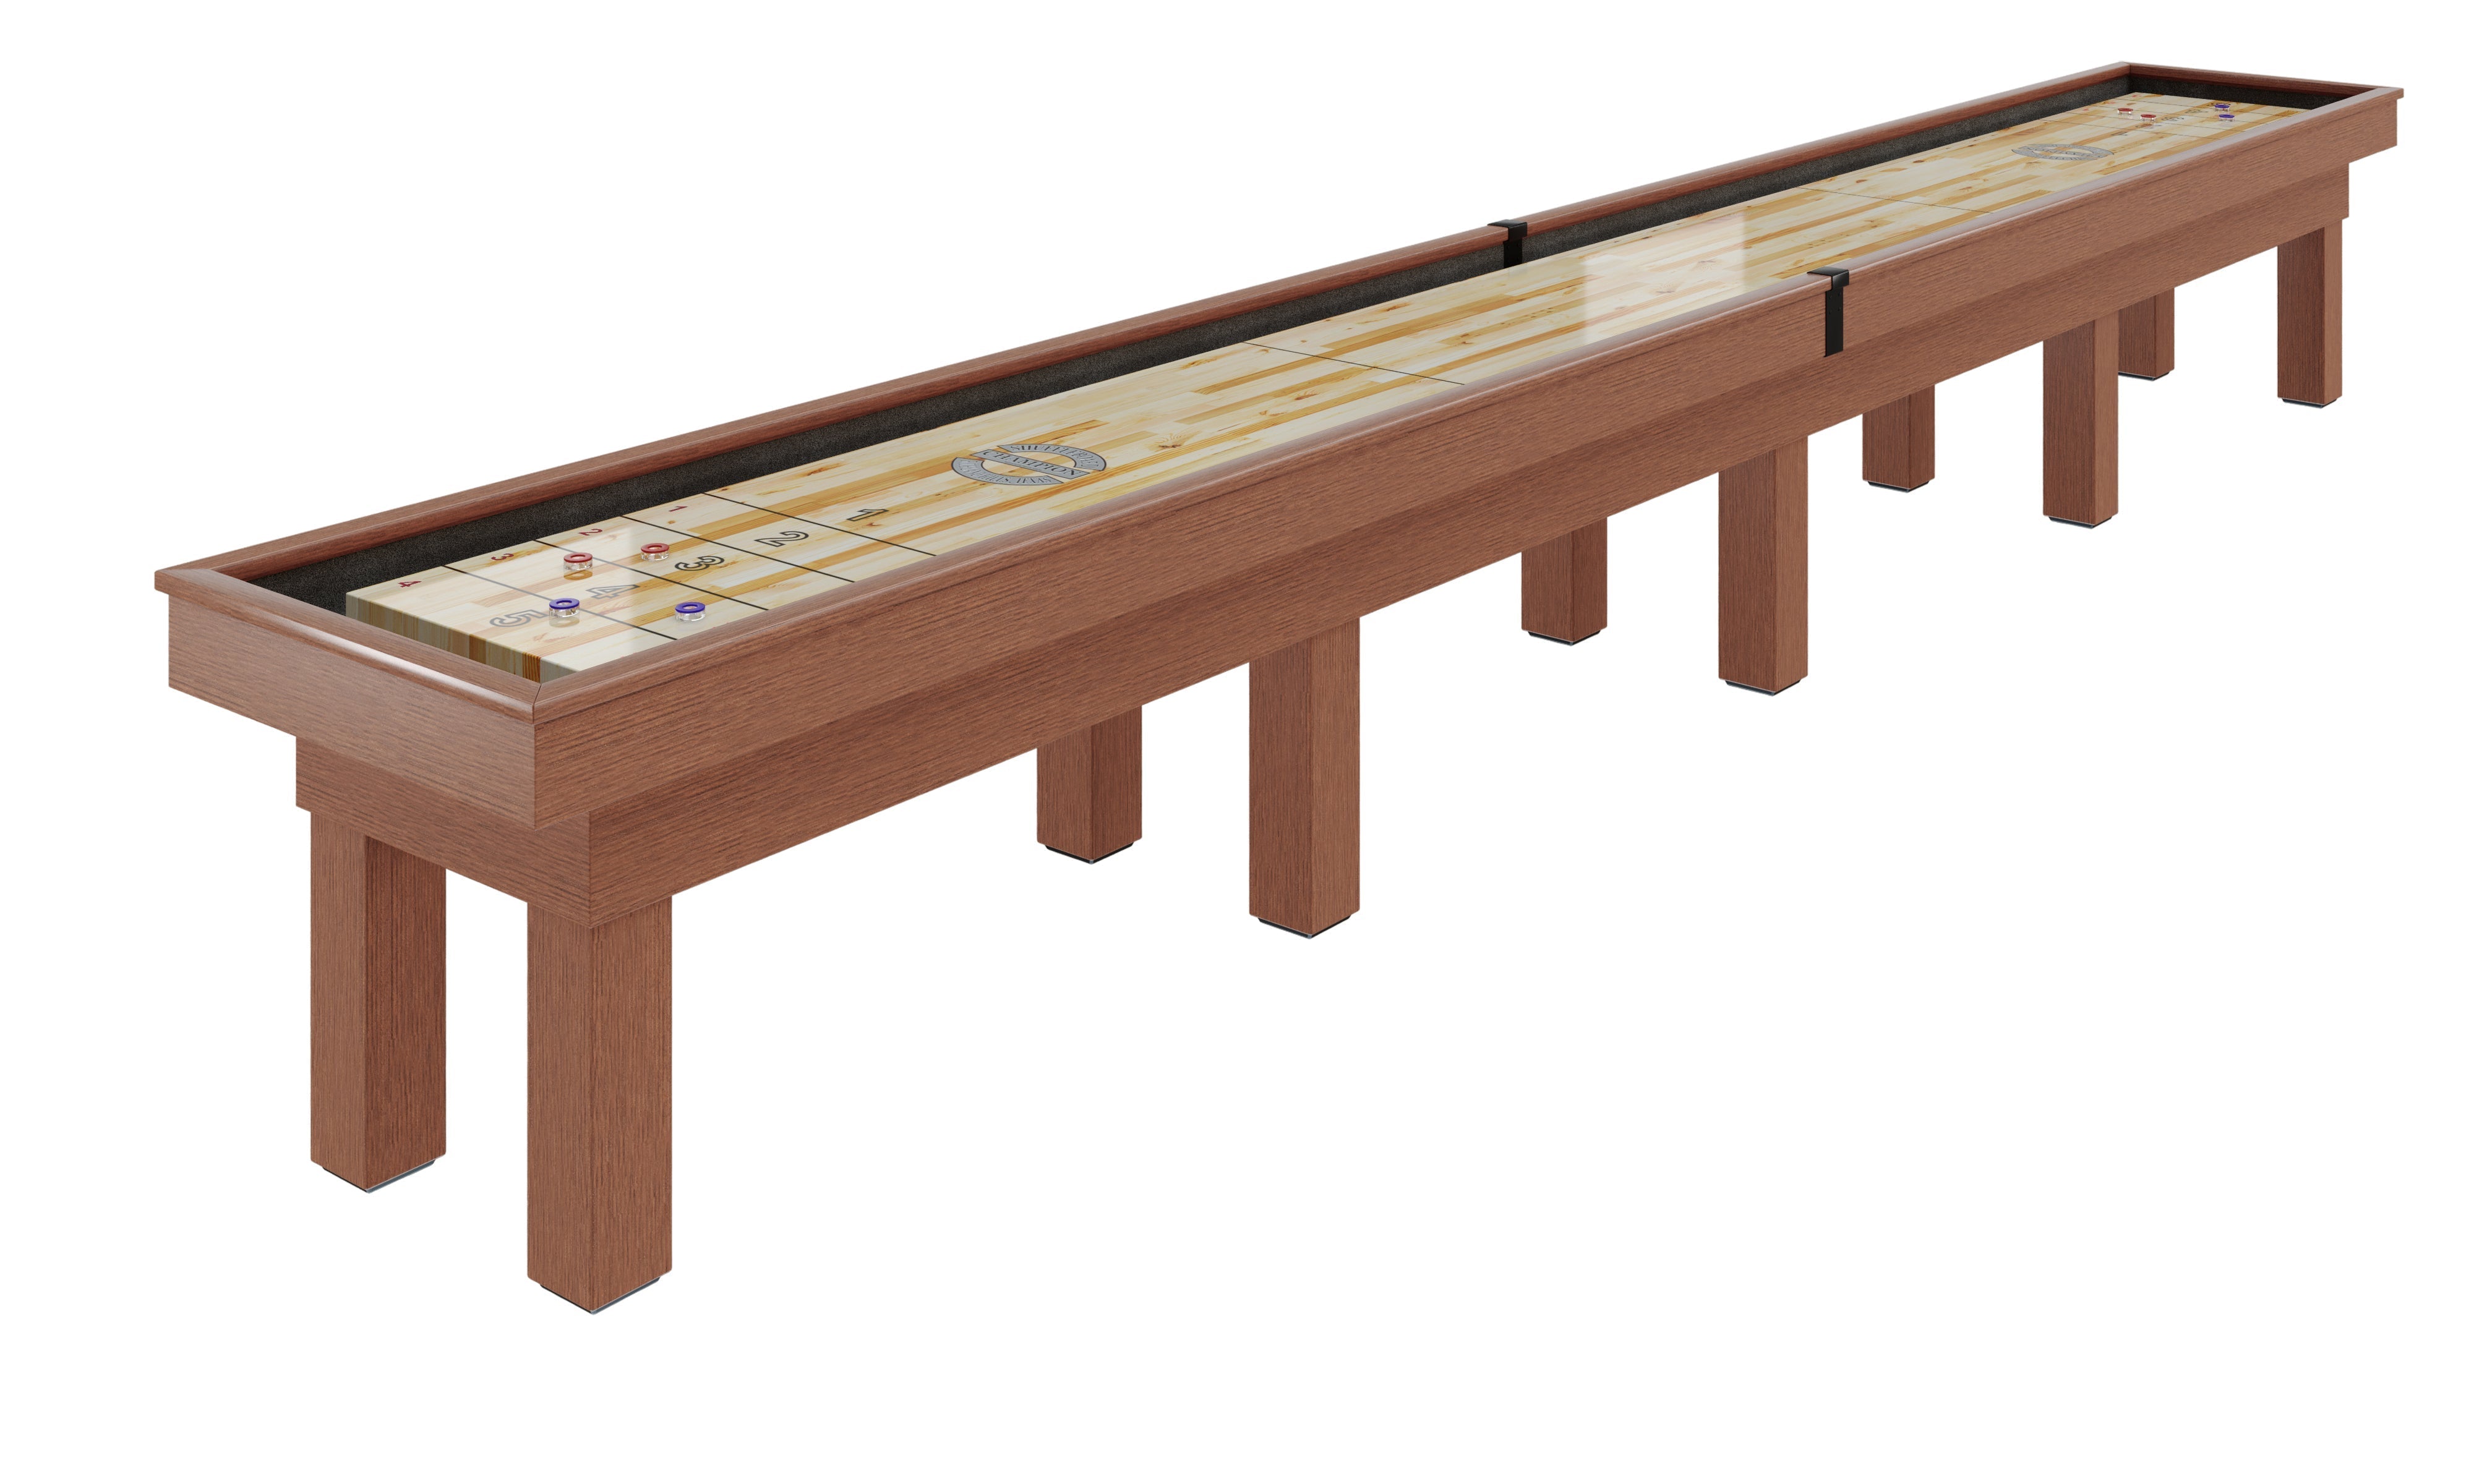 Champion 16' Palo Duro Shuffleboard Table